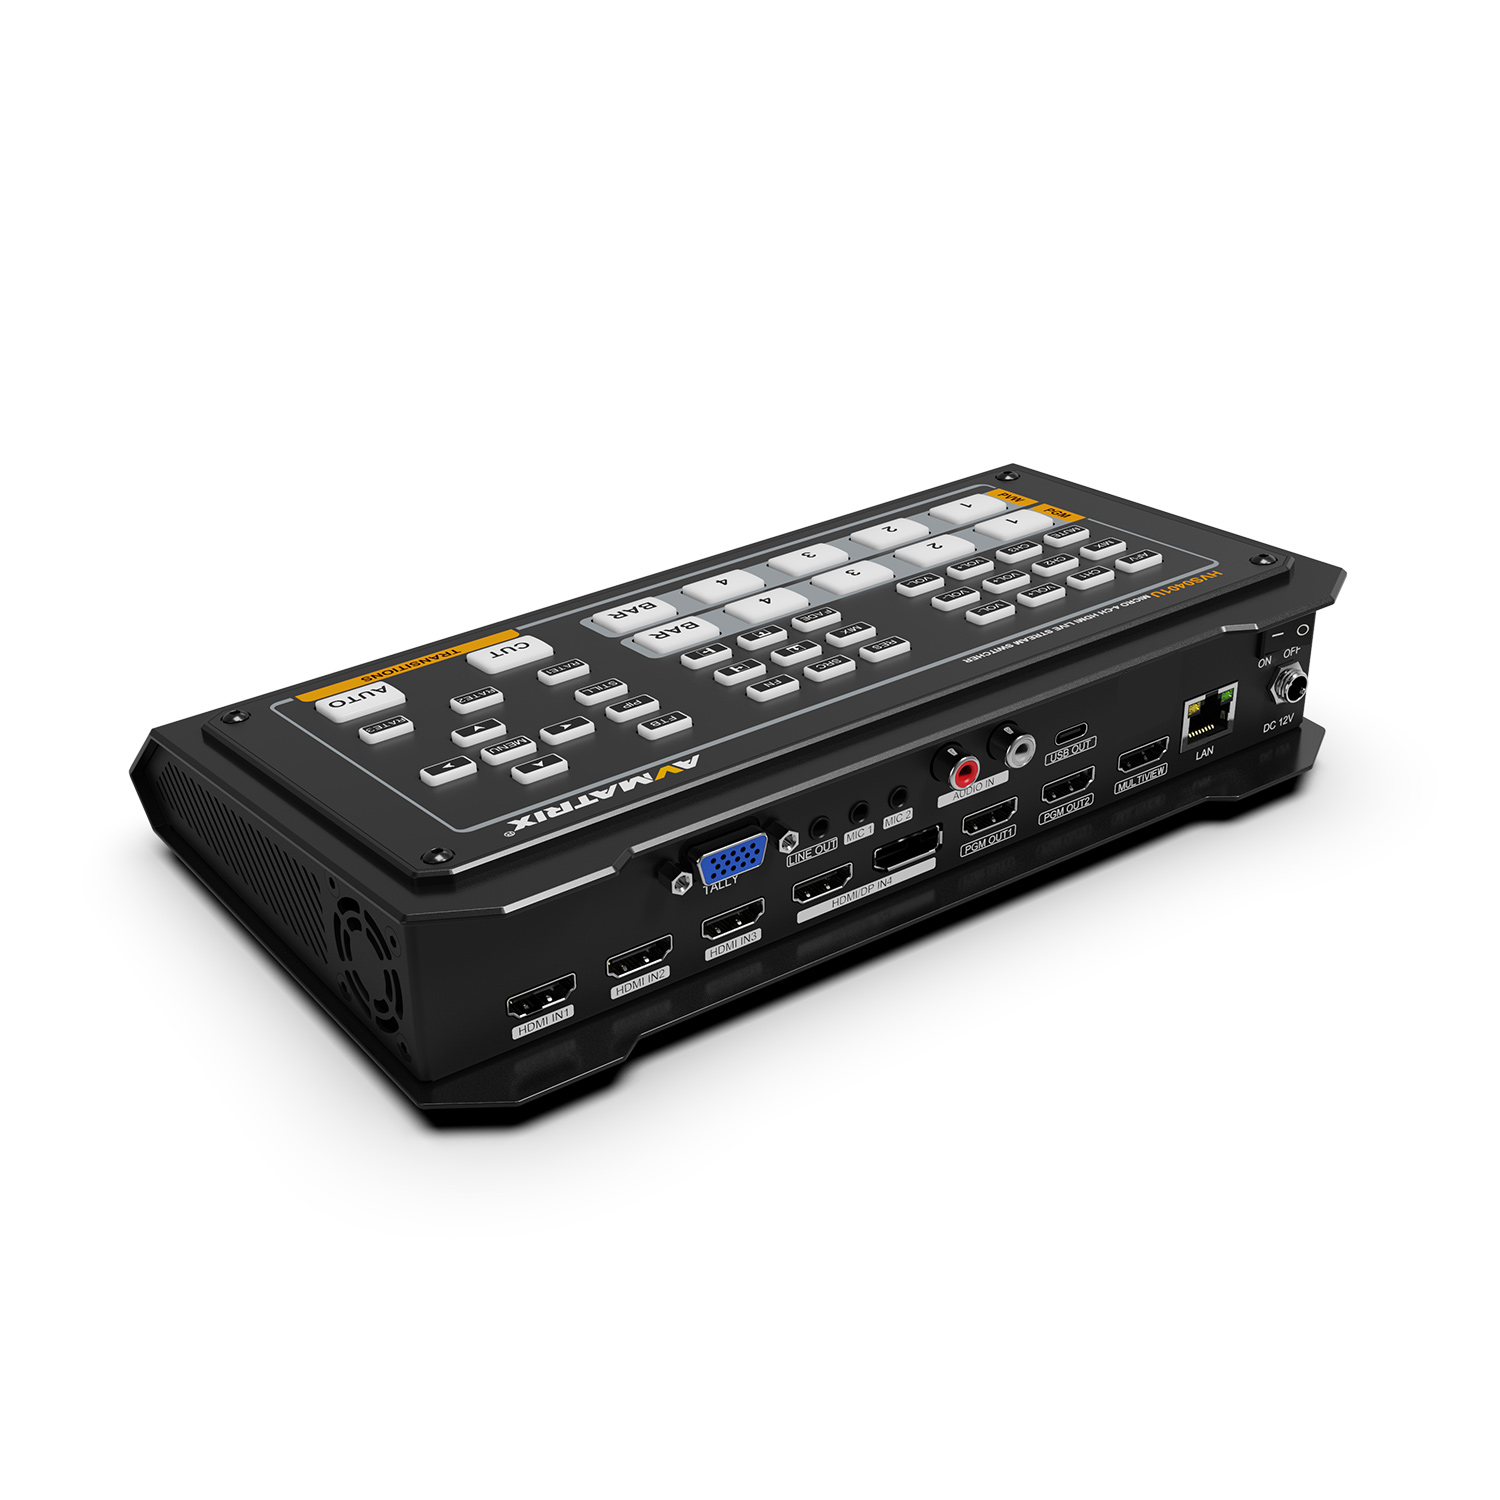   AVMATRIX HVS0401U  4CH HDMI/DP USB   Ultra-mart